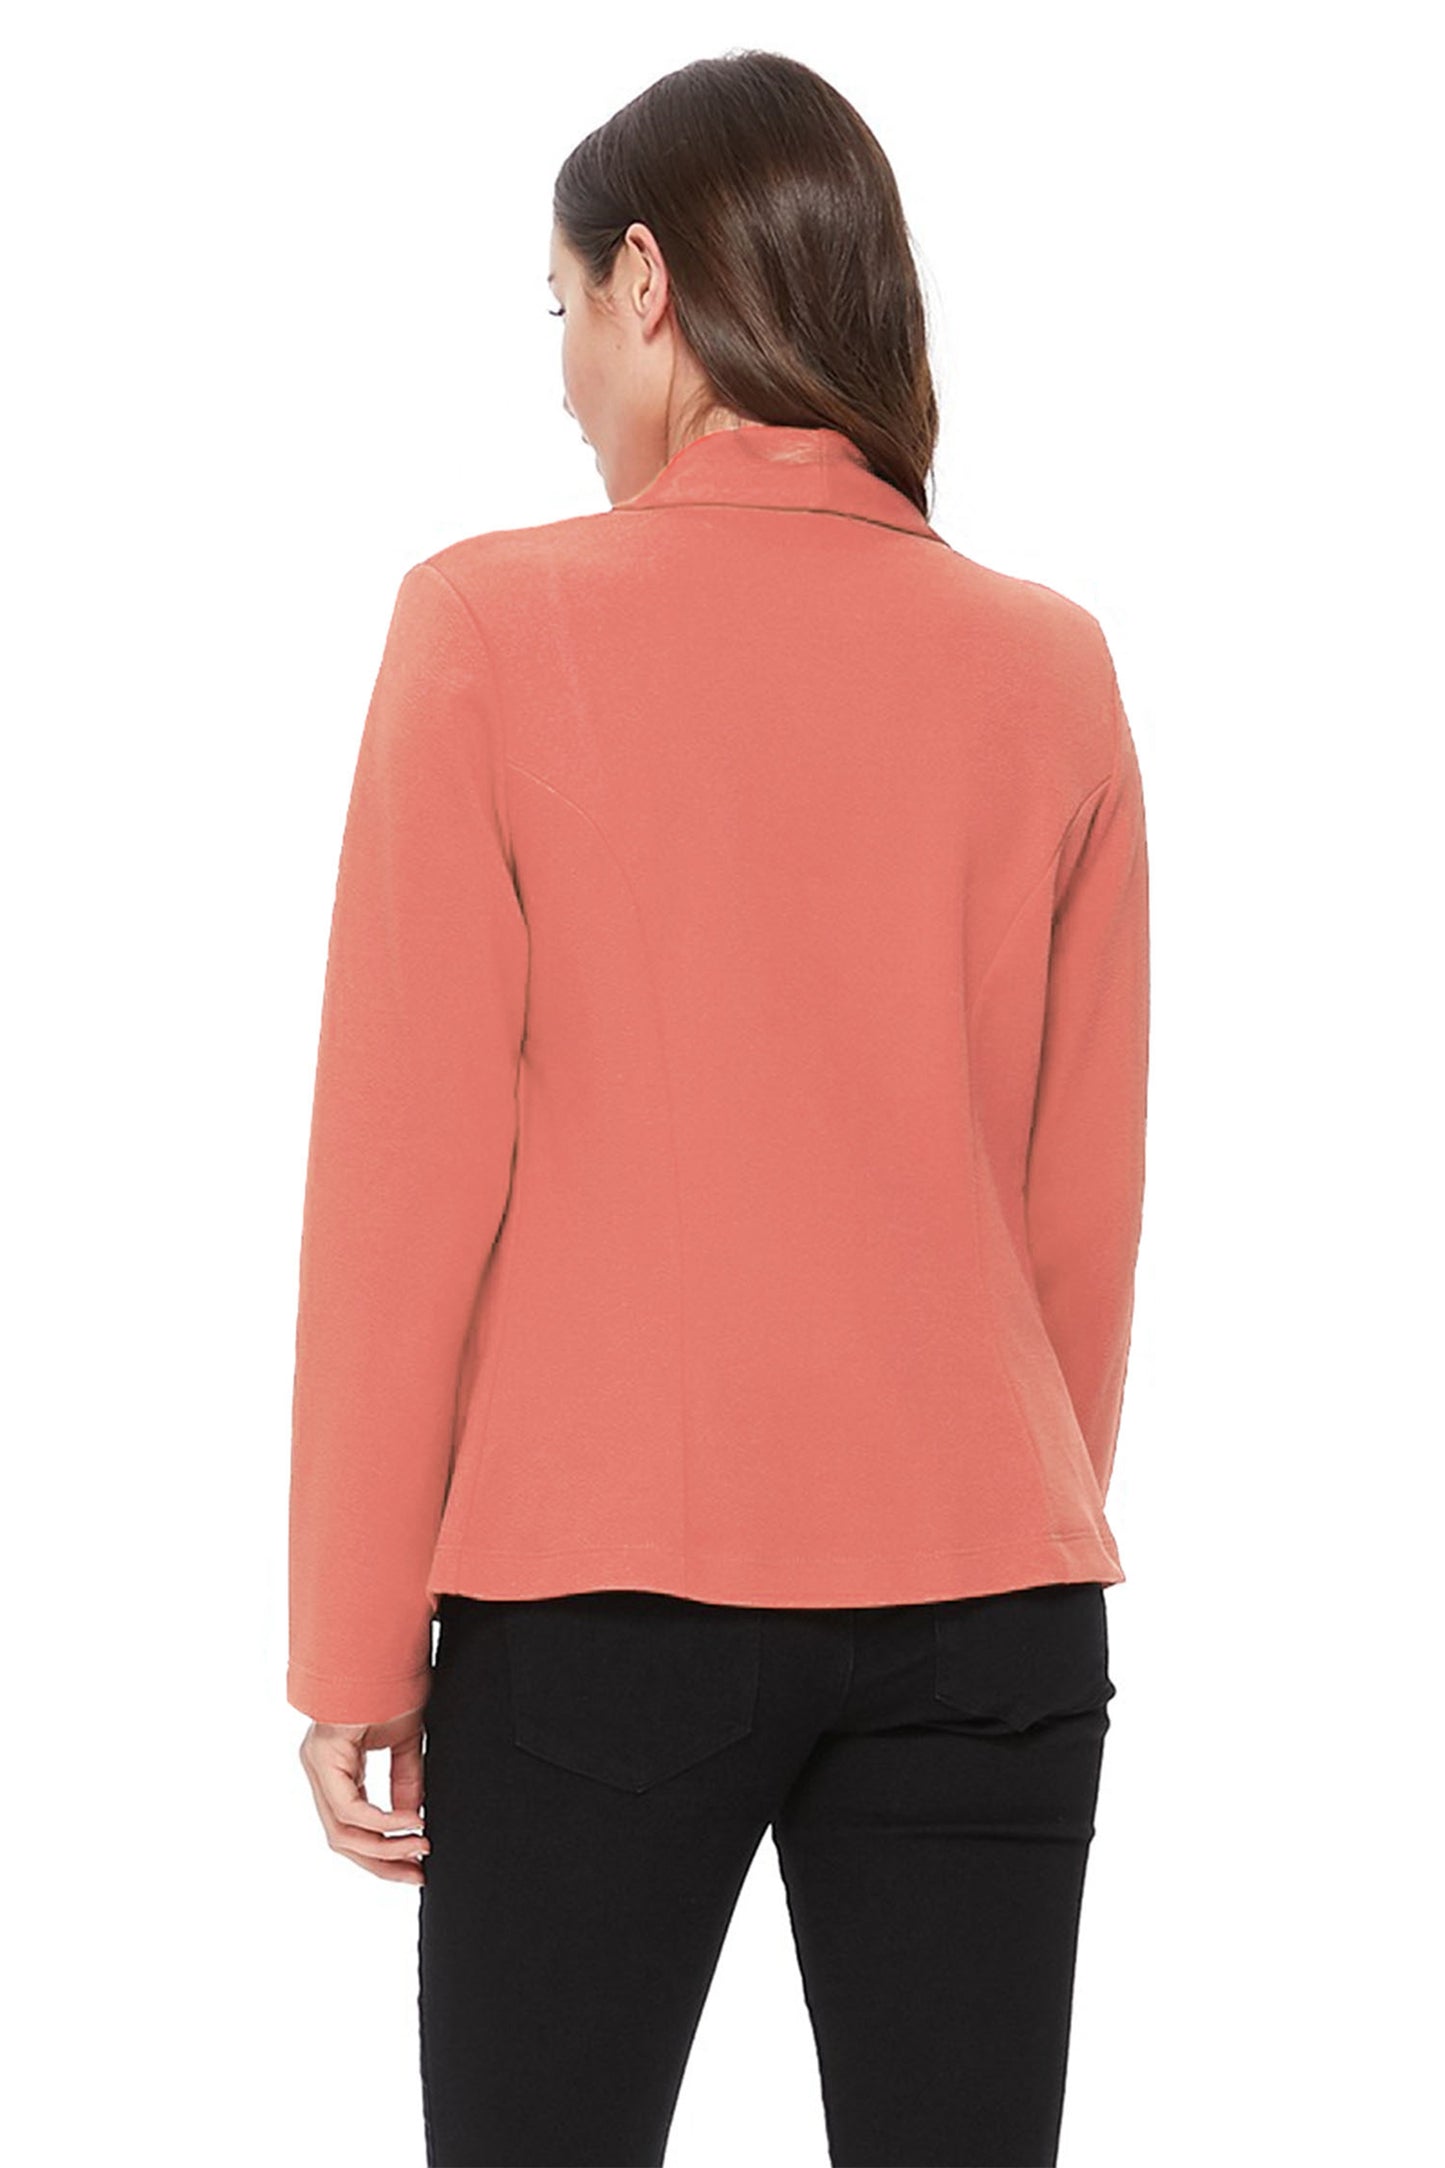 Women's Casual Long Sleeves Office Workwear Solid Blazer Jacket S-3XL